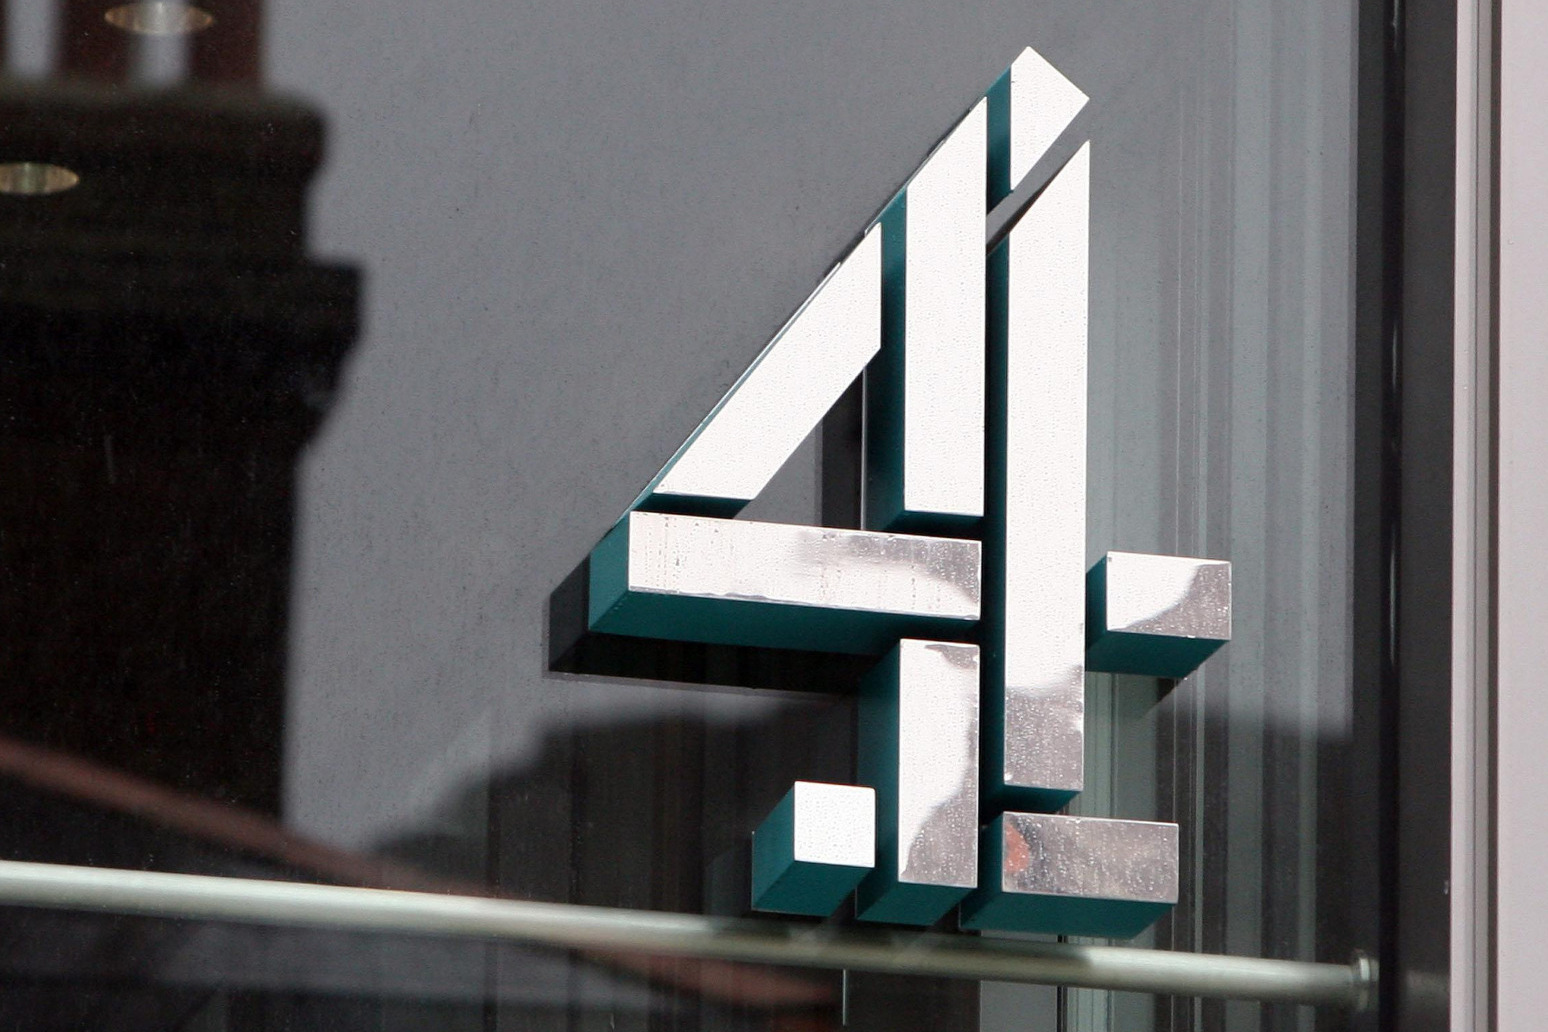 ‘Unique’ Channel 4 must remain in public hands 